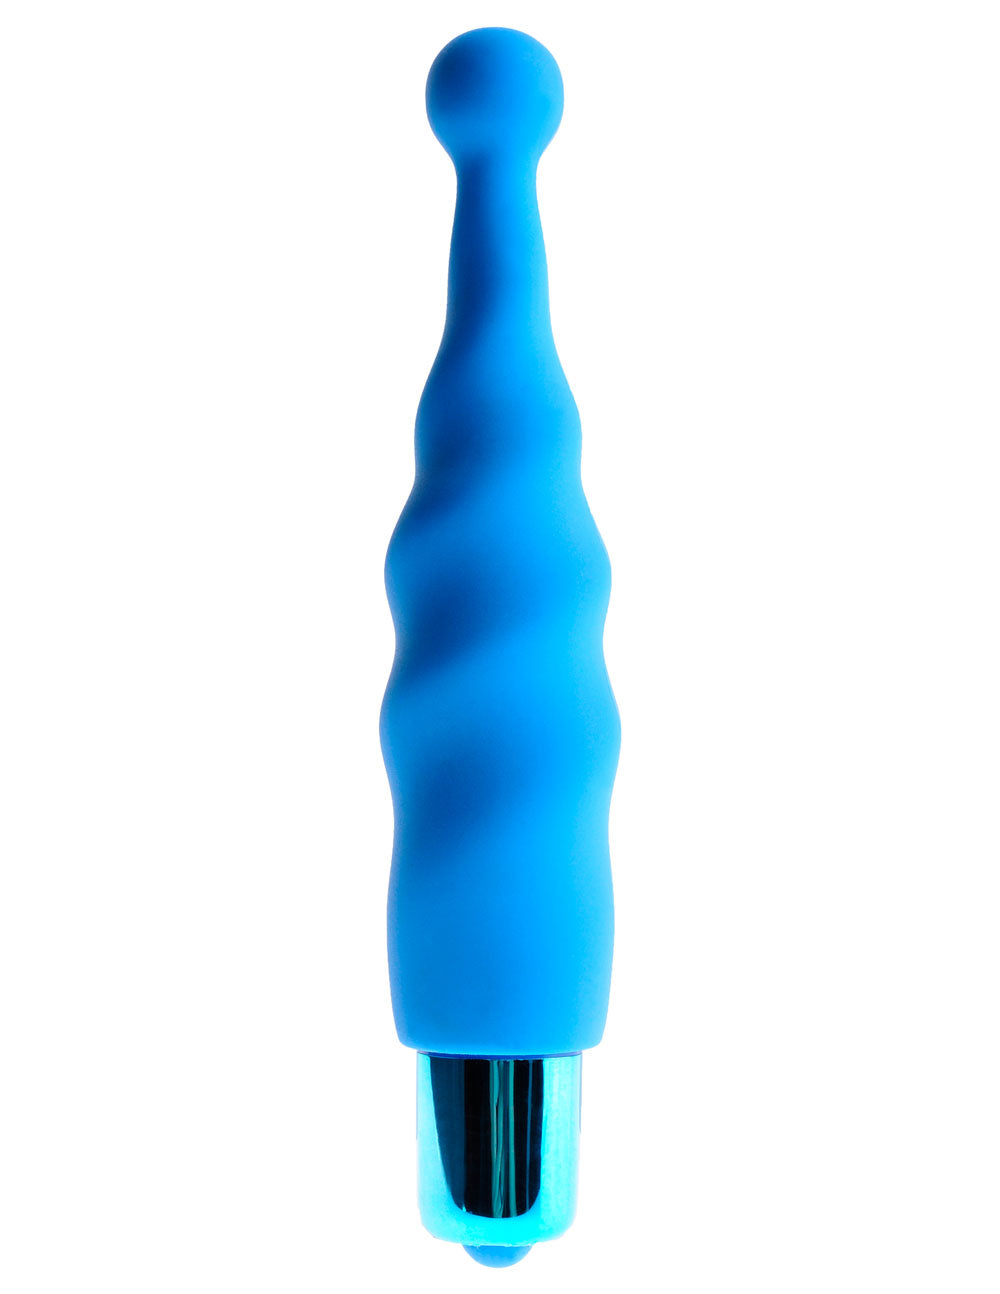 Ultra Smooth Silicone Fun Vibrator - Blue Blue